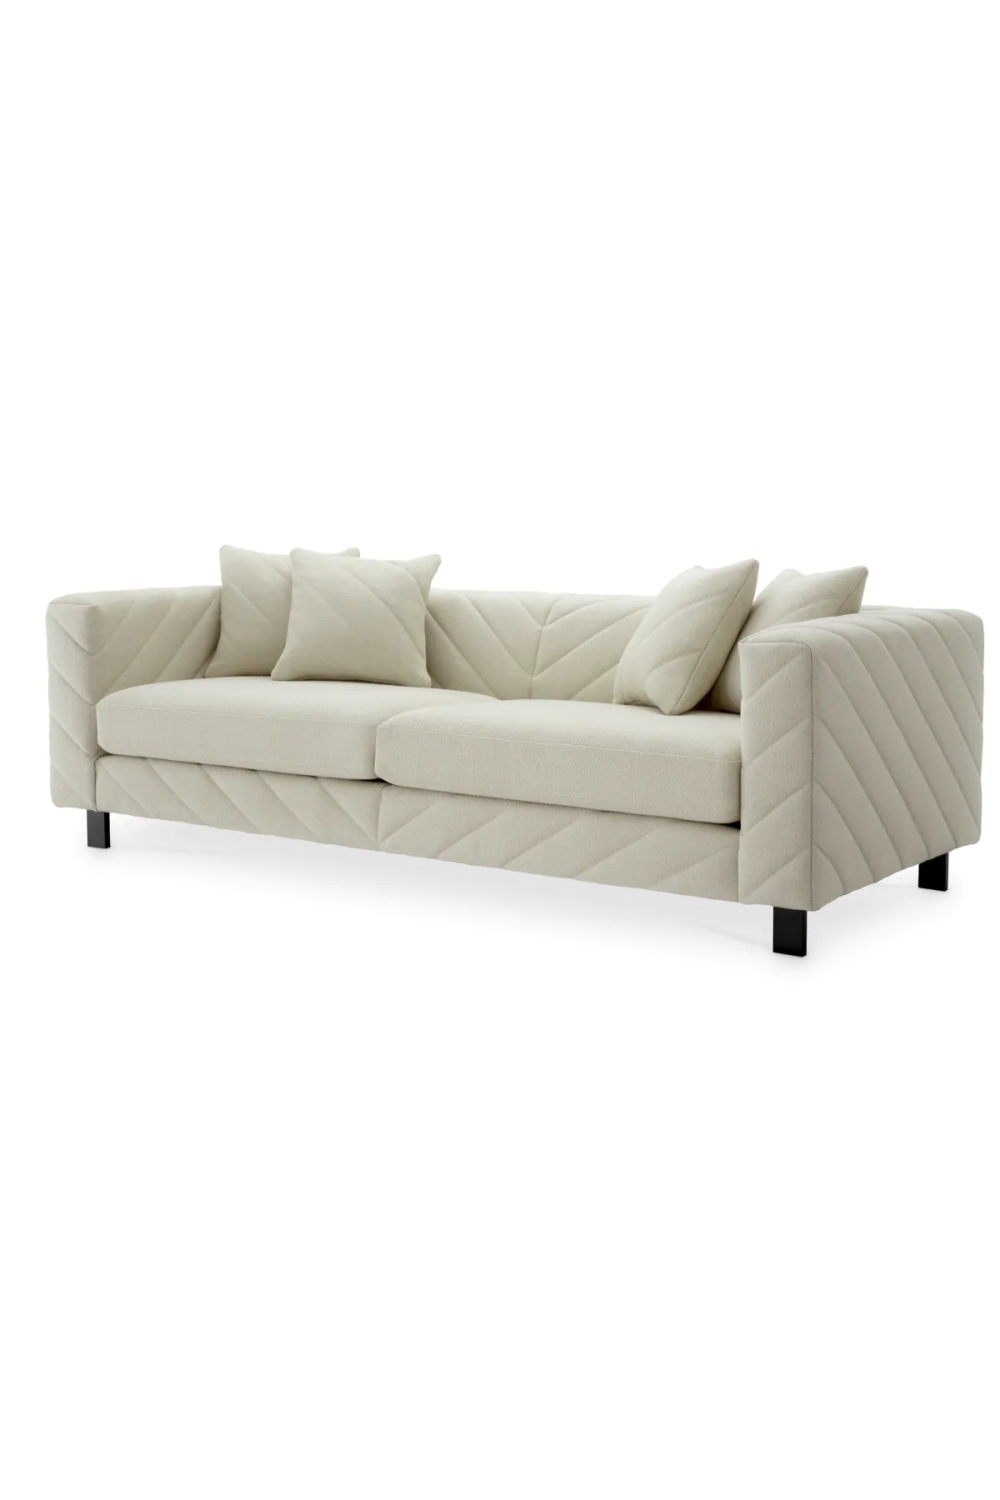 Patterned Modern Sofa | Eichholtz Avellino | Oroa.com